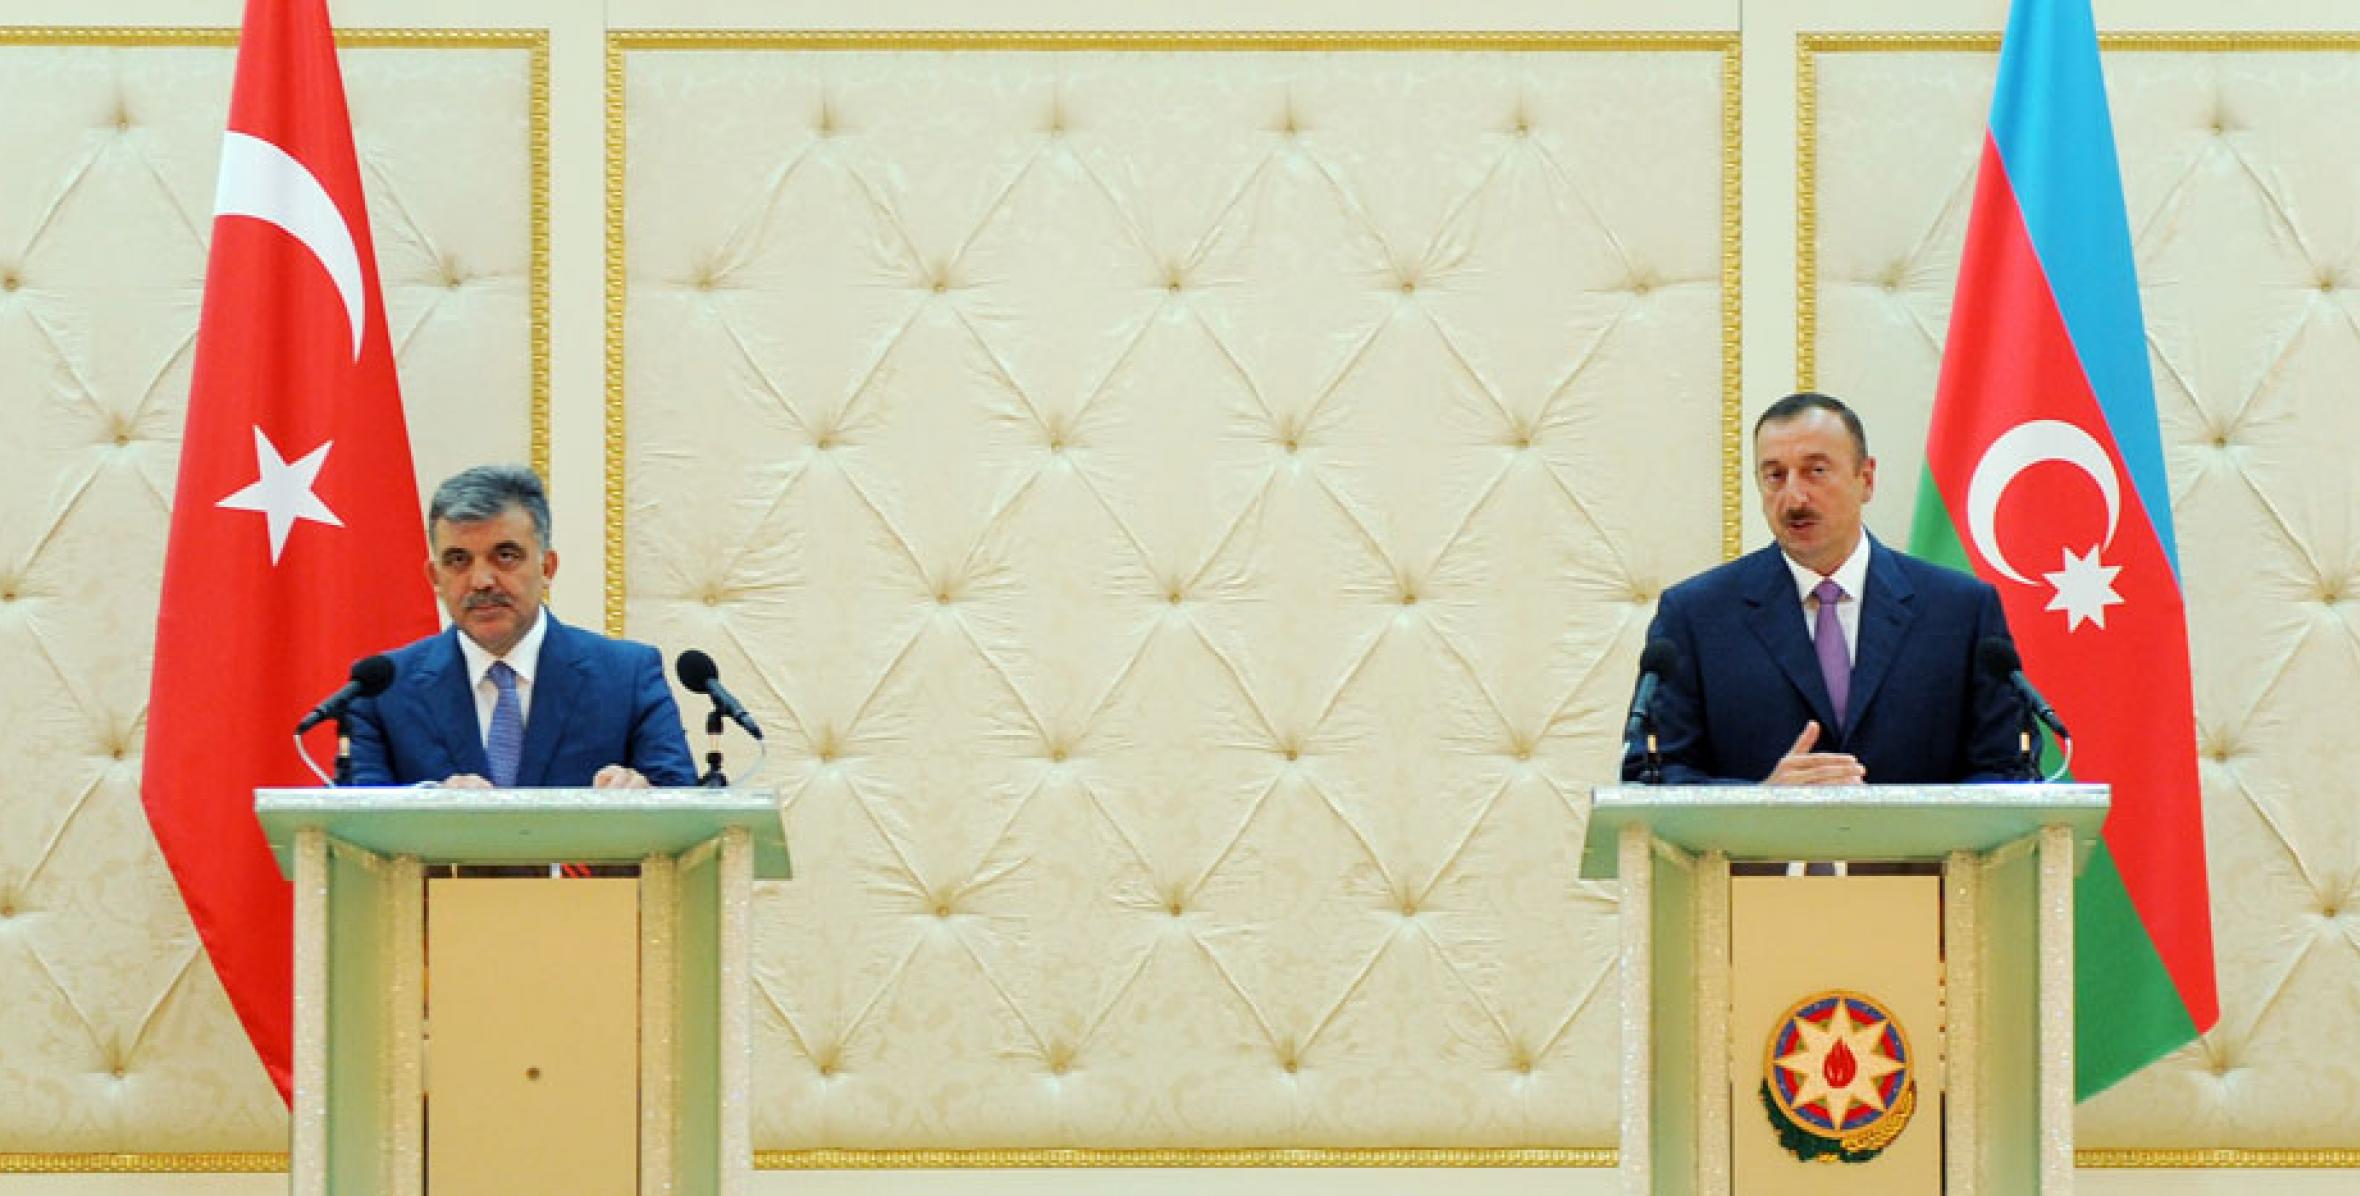 Ilham Aliyev and President of Turkey Abdullah Gul had press conference